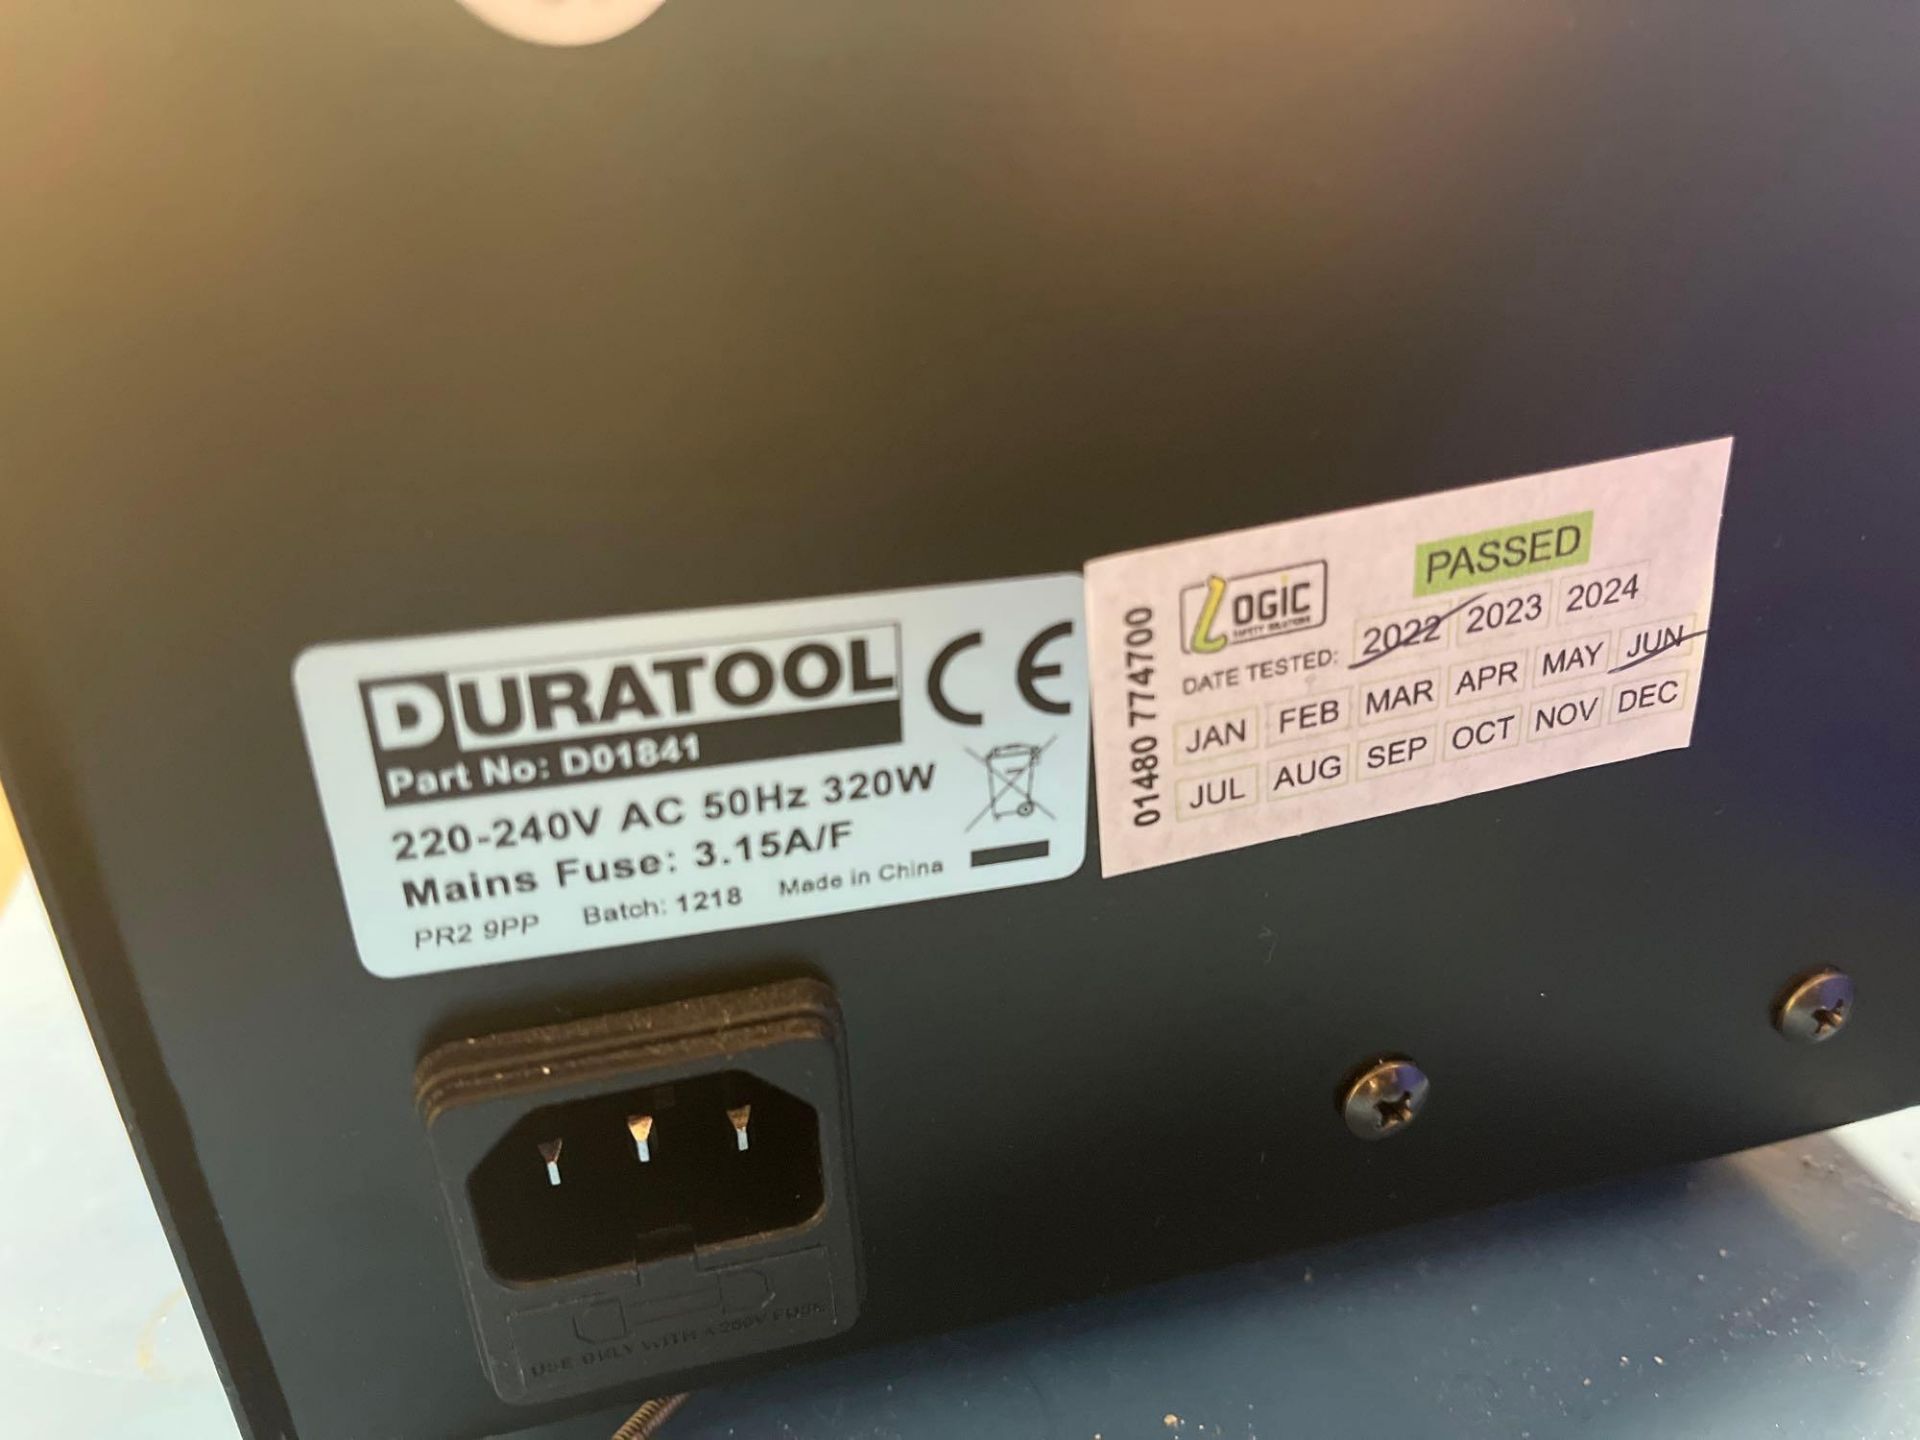 DuraTool D01841 solder station - Image 3 of 4